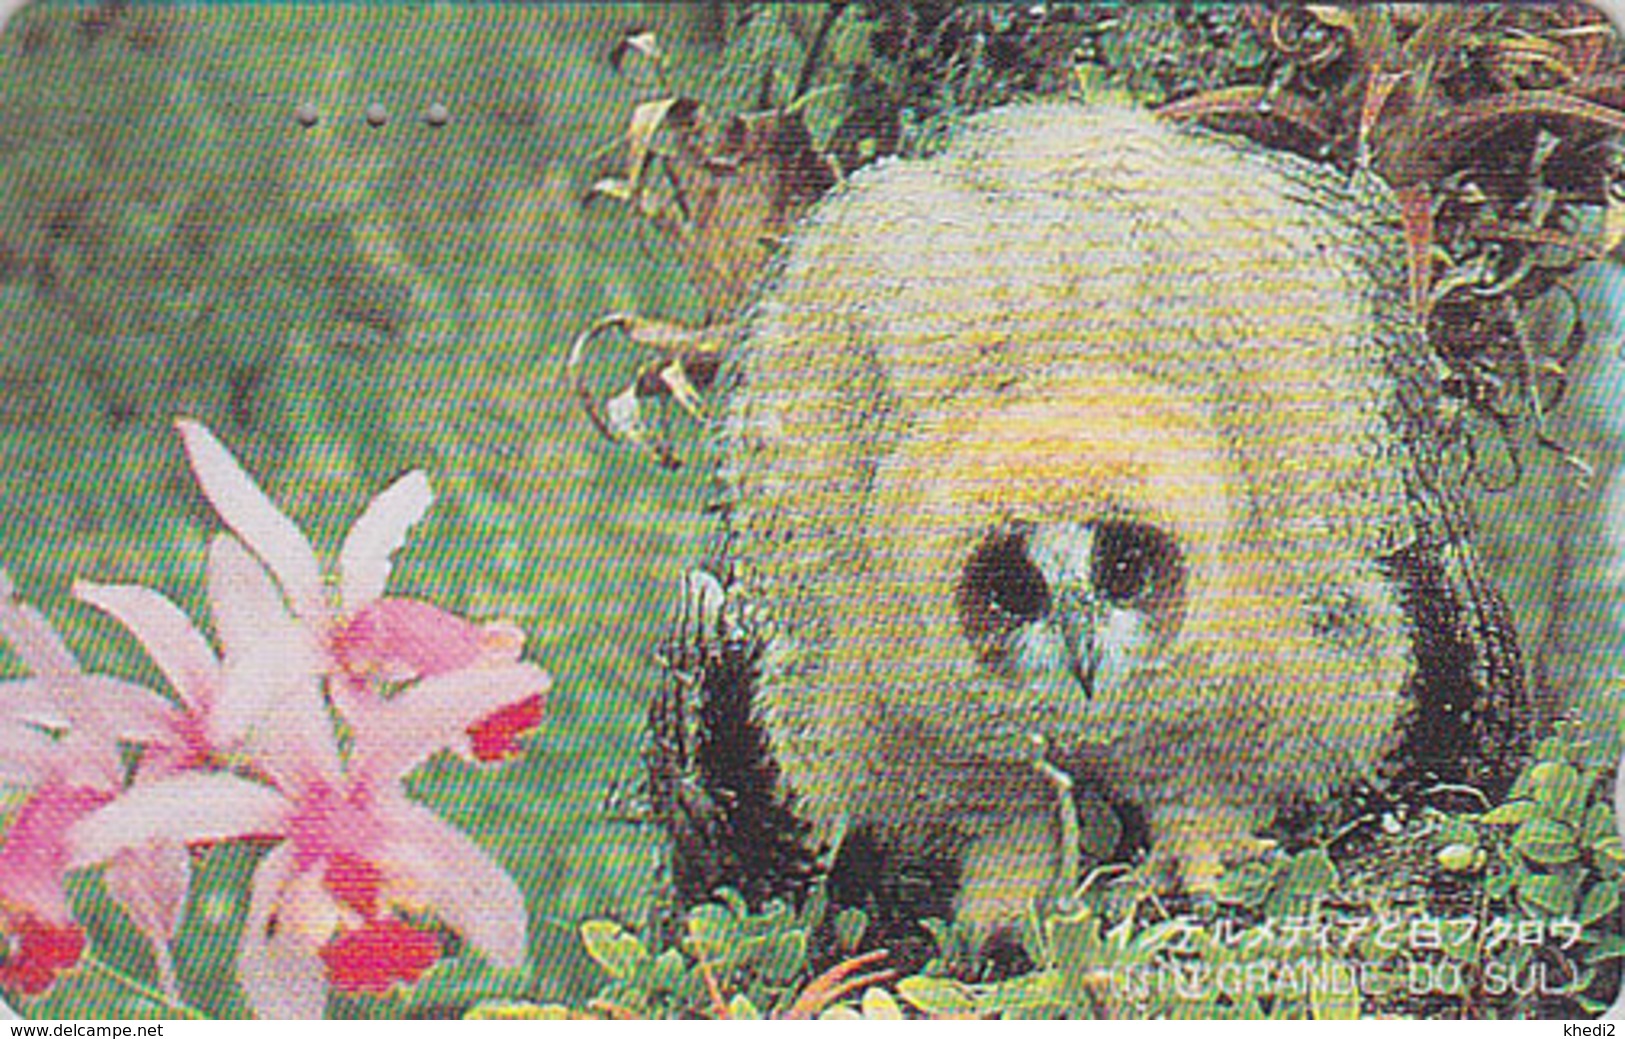 Télécarte Japon / 110-011 - Animal OISEAU - HIBOU & Fleur ORCHIDEE - OWL BIRD & ORCHID Flower Japan Phonecard - 4155 - Owls